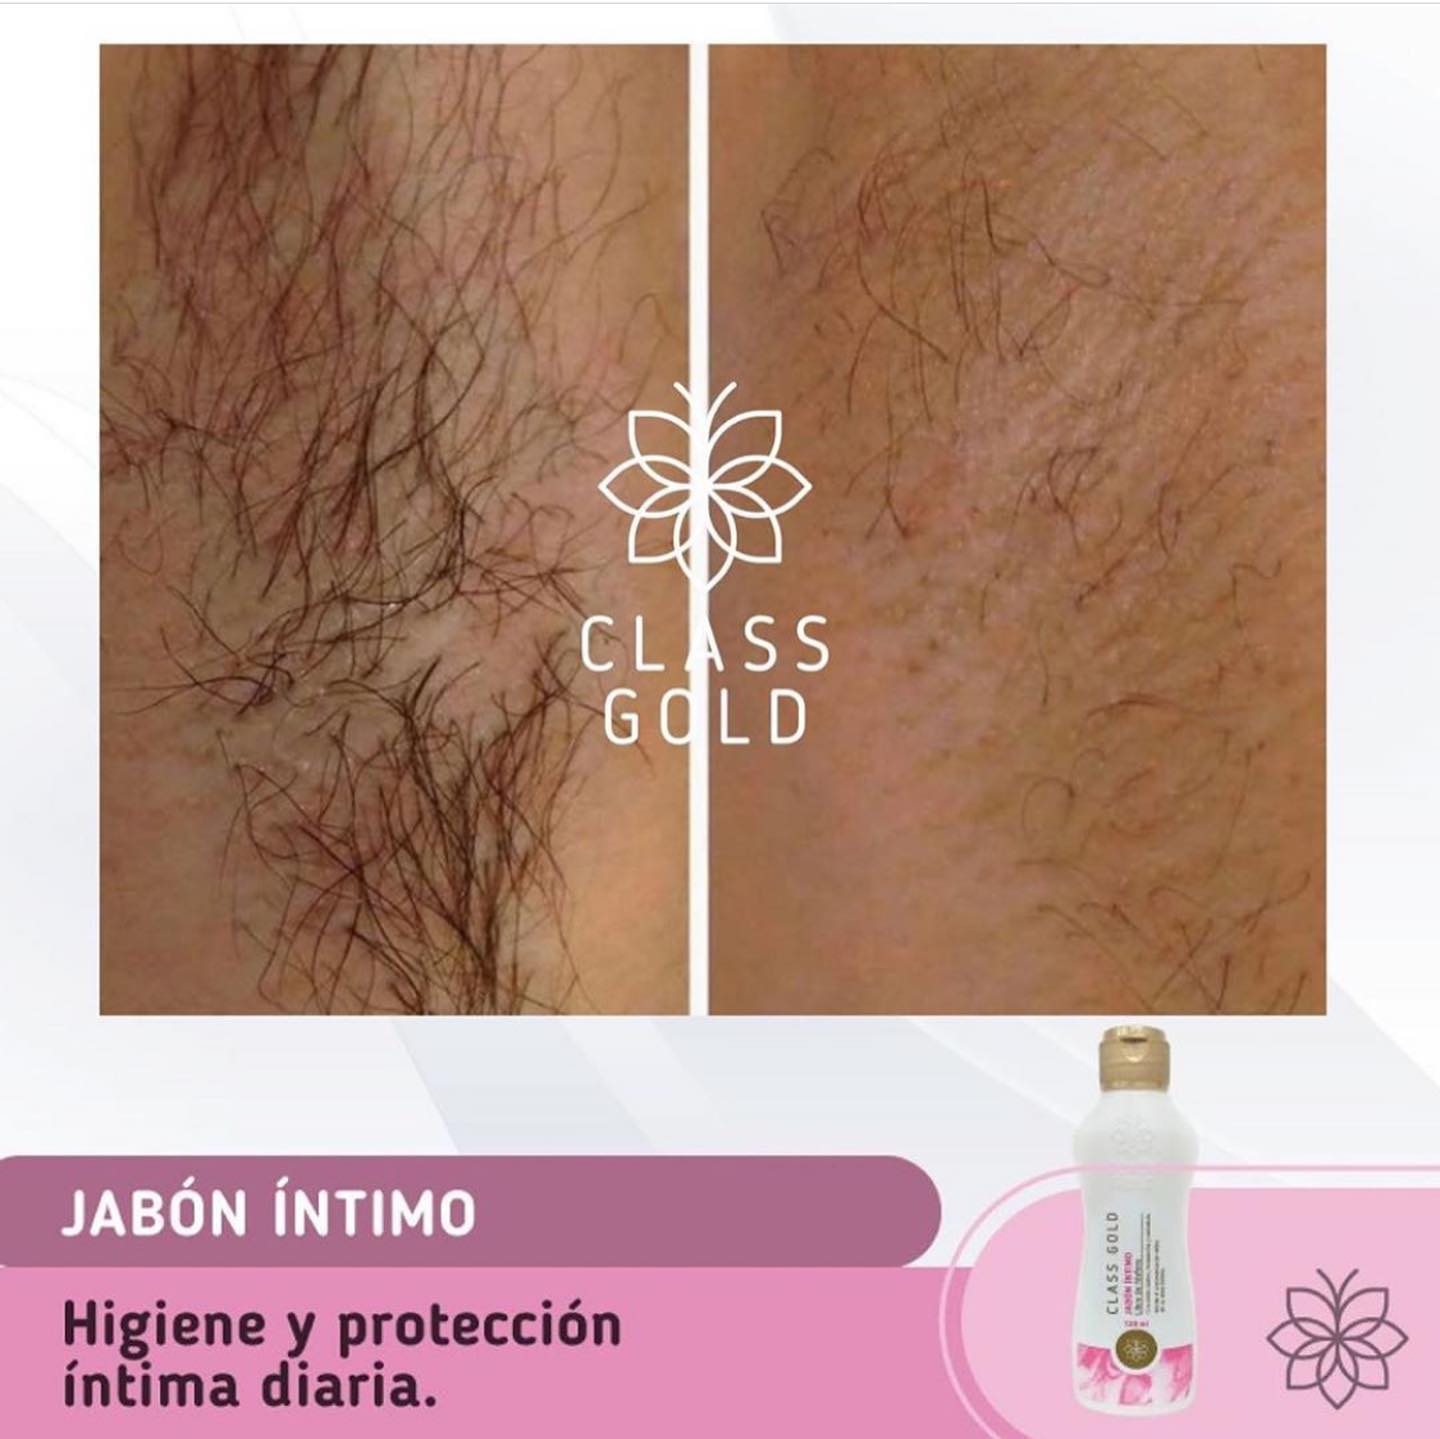 Jabon Intimo | Class Gold Jabón Íntimo Class Gold Magic Hair Oficial